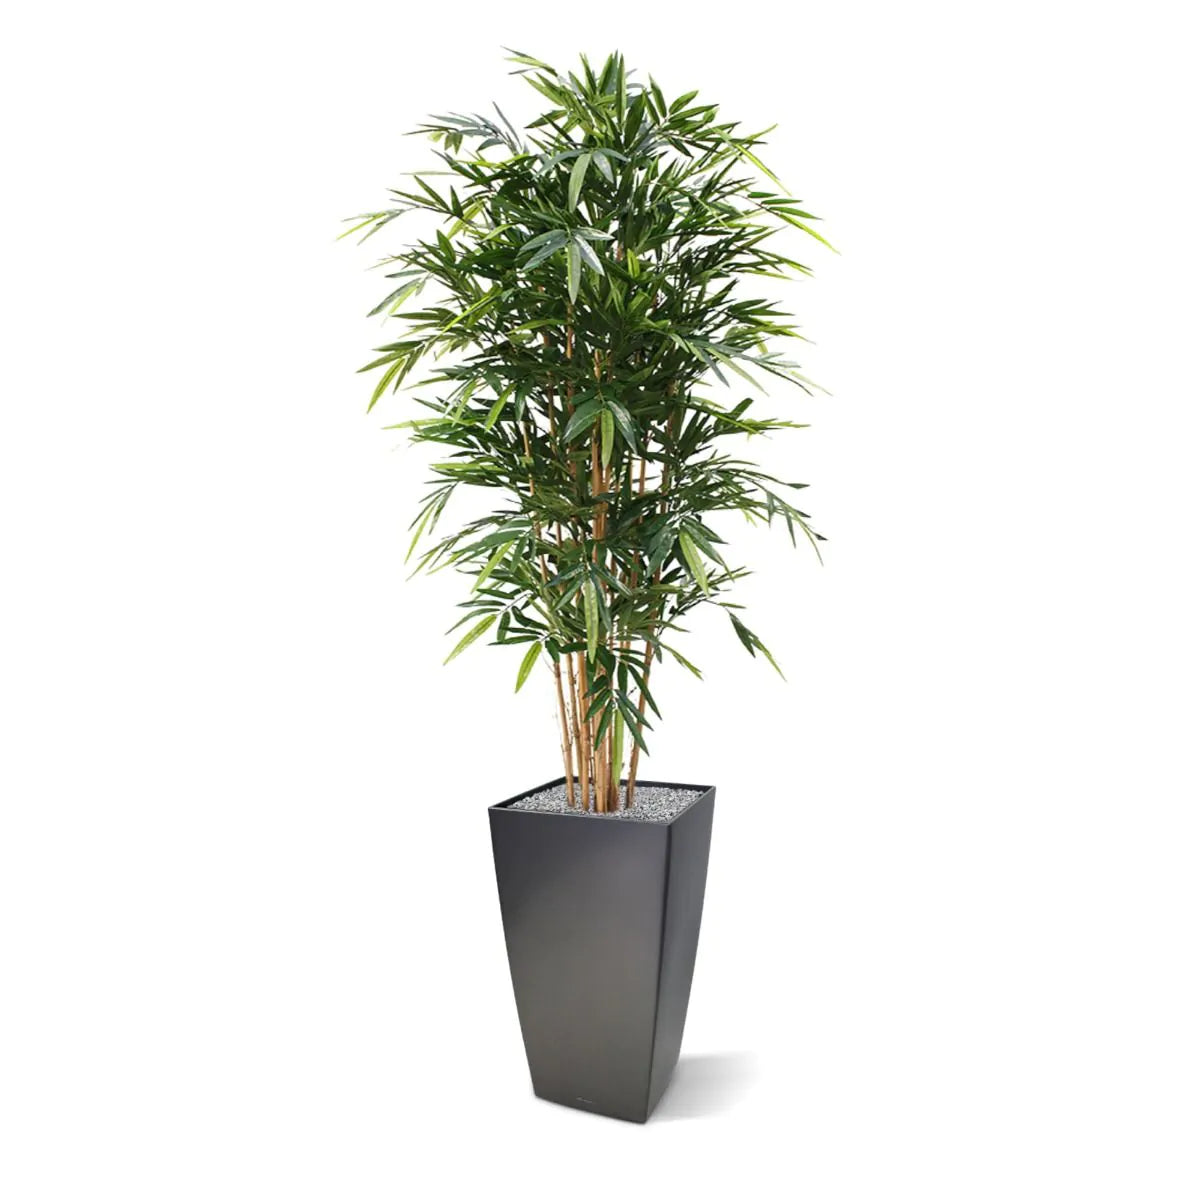 Pflanzenglanz® Bambus Kunstpflanze Deluxe 180 cm Kunstbaum